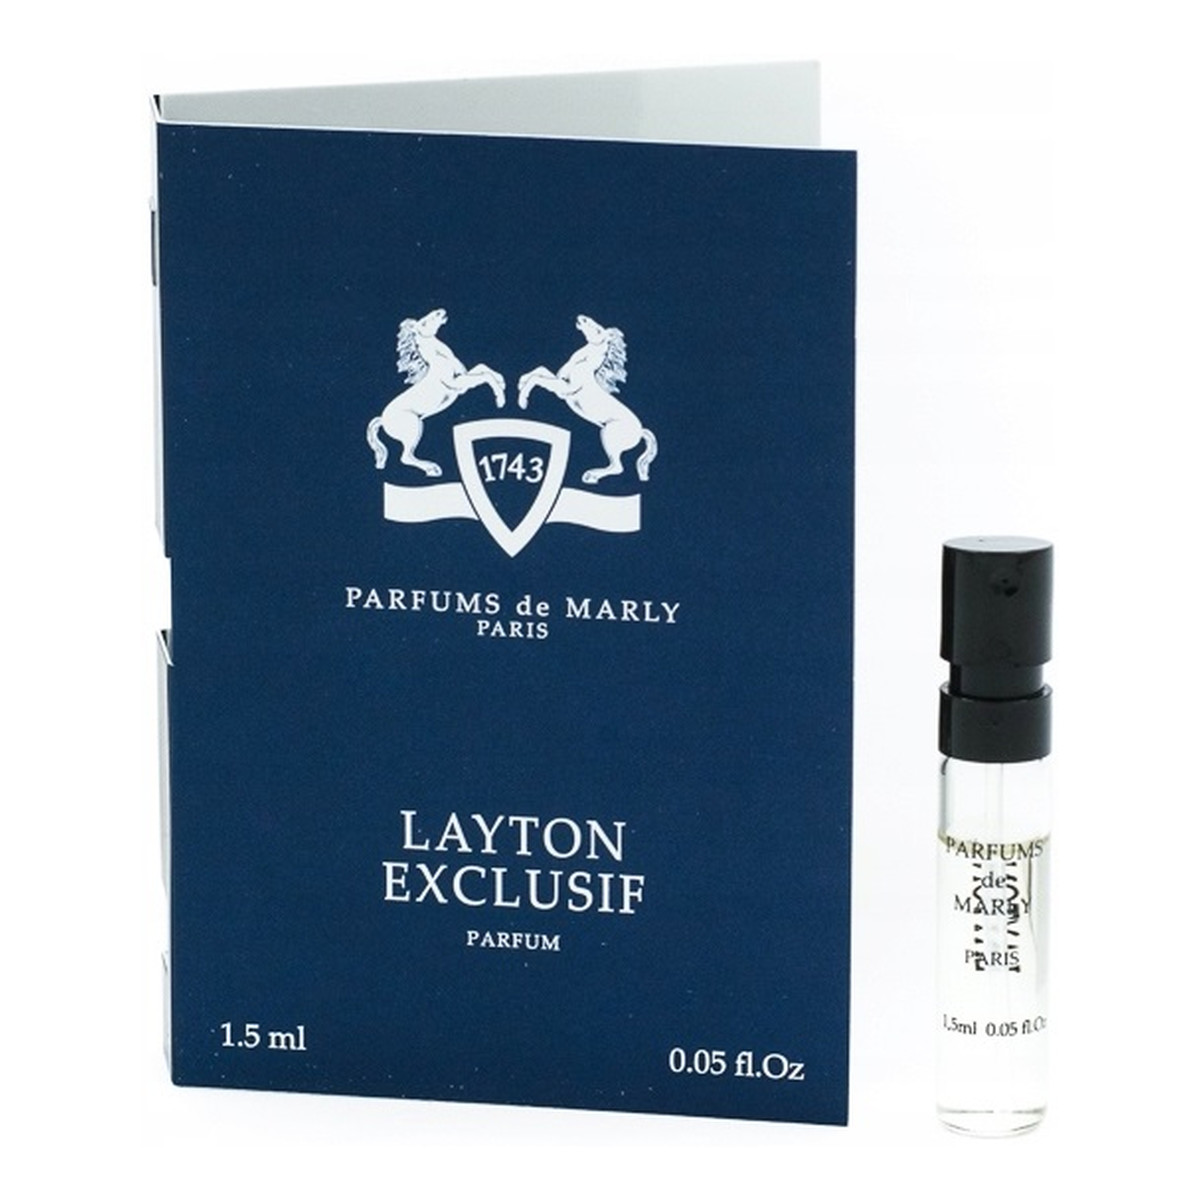 Parfums de Marly Layton Exclusif Perfumy spray próbka 1.5ml